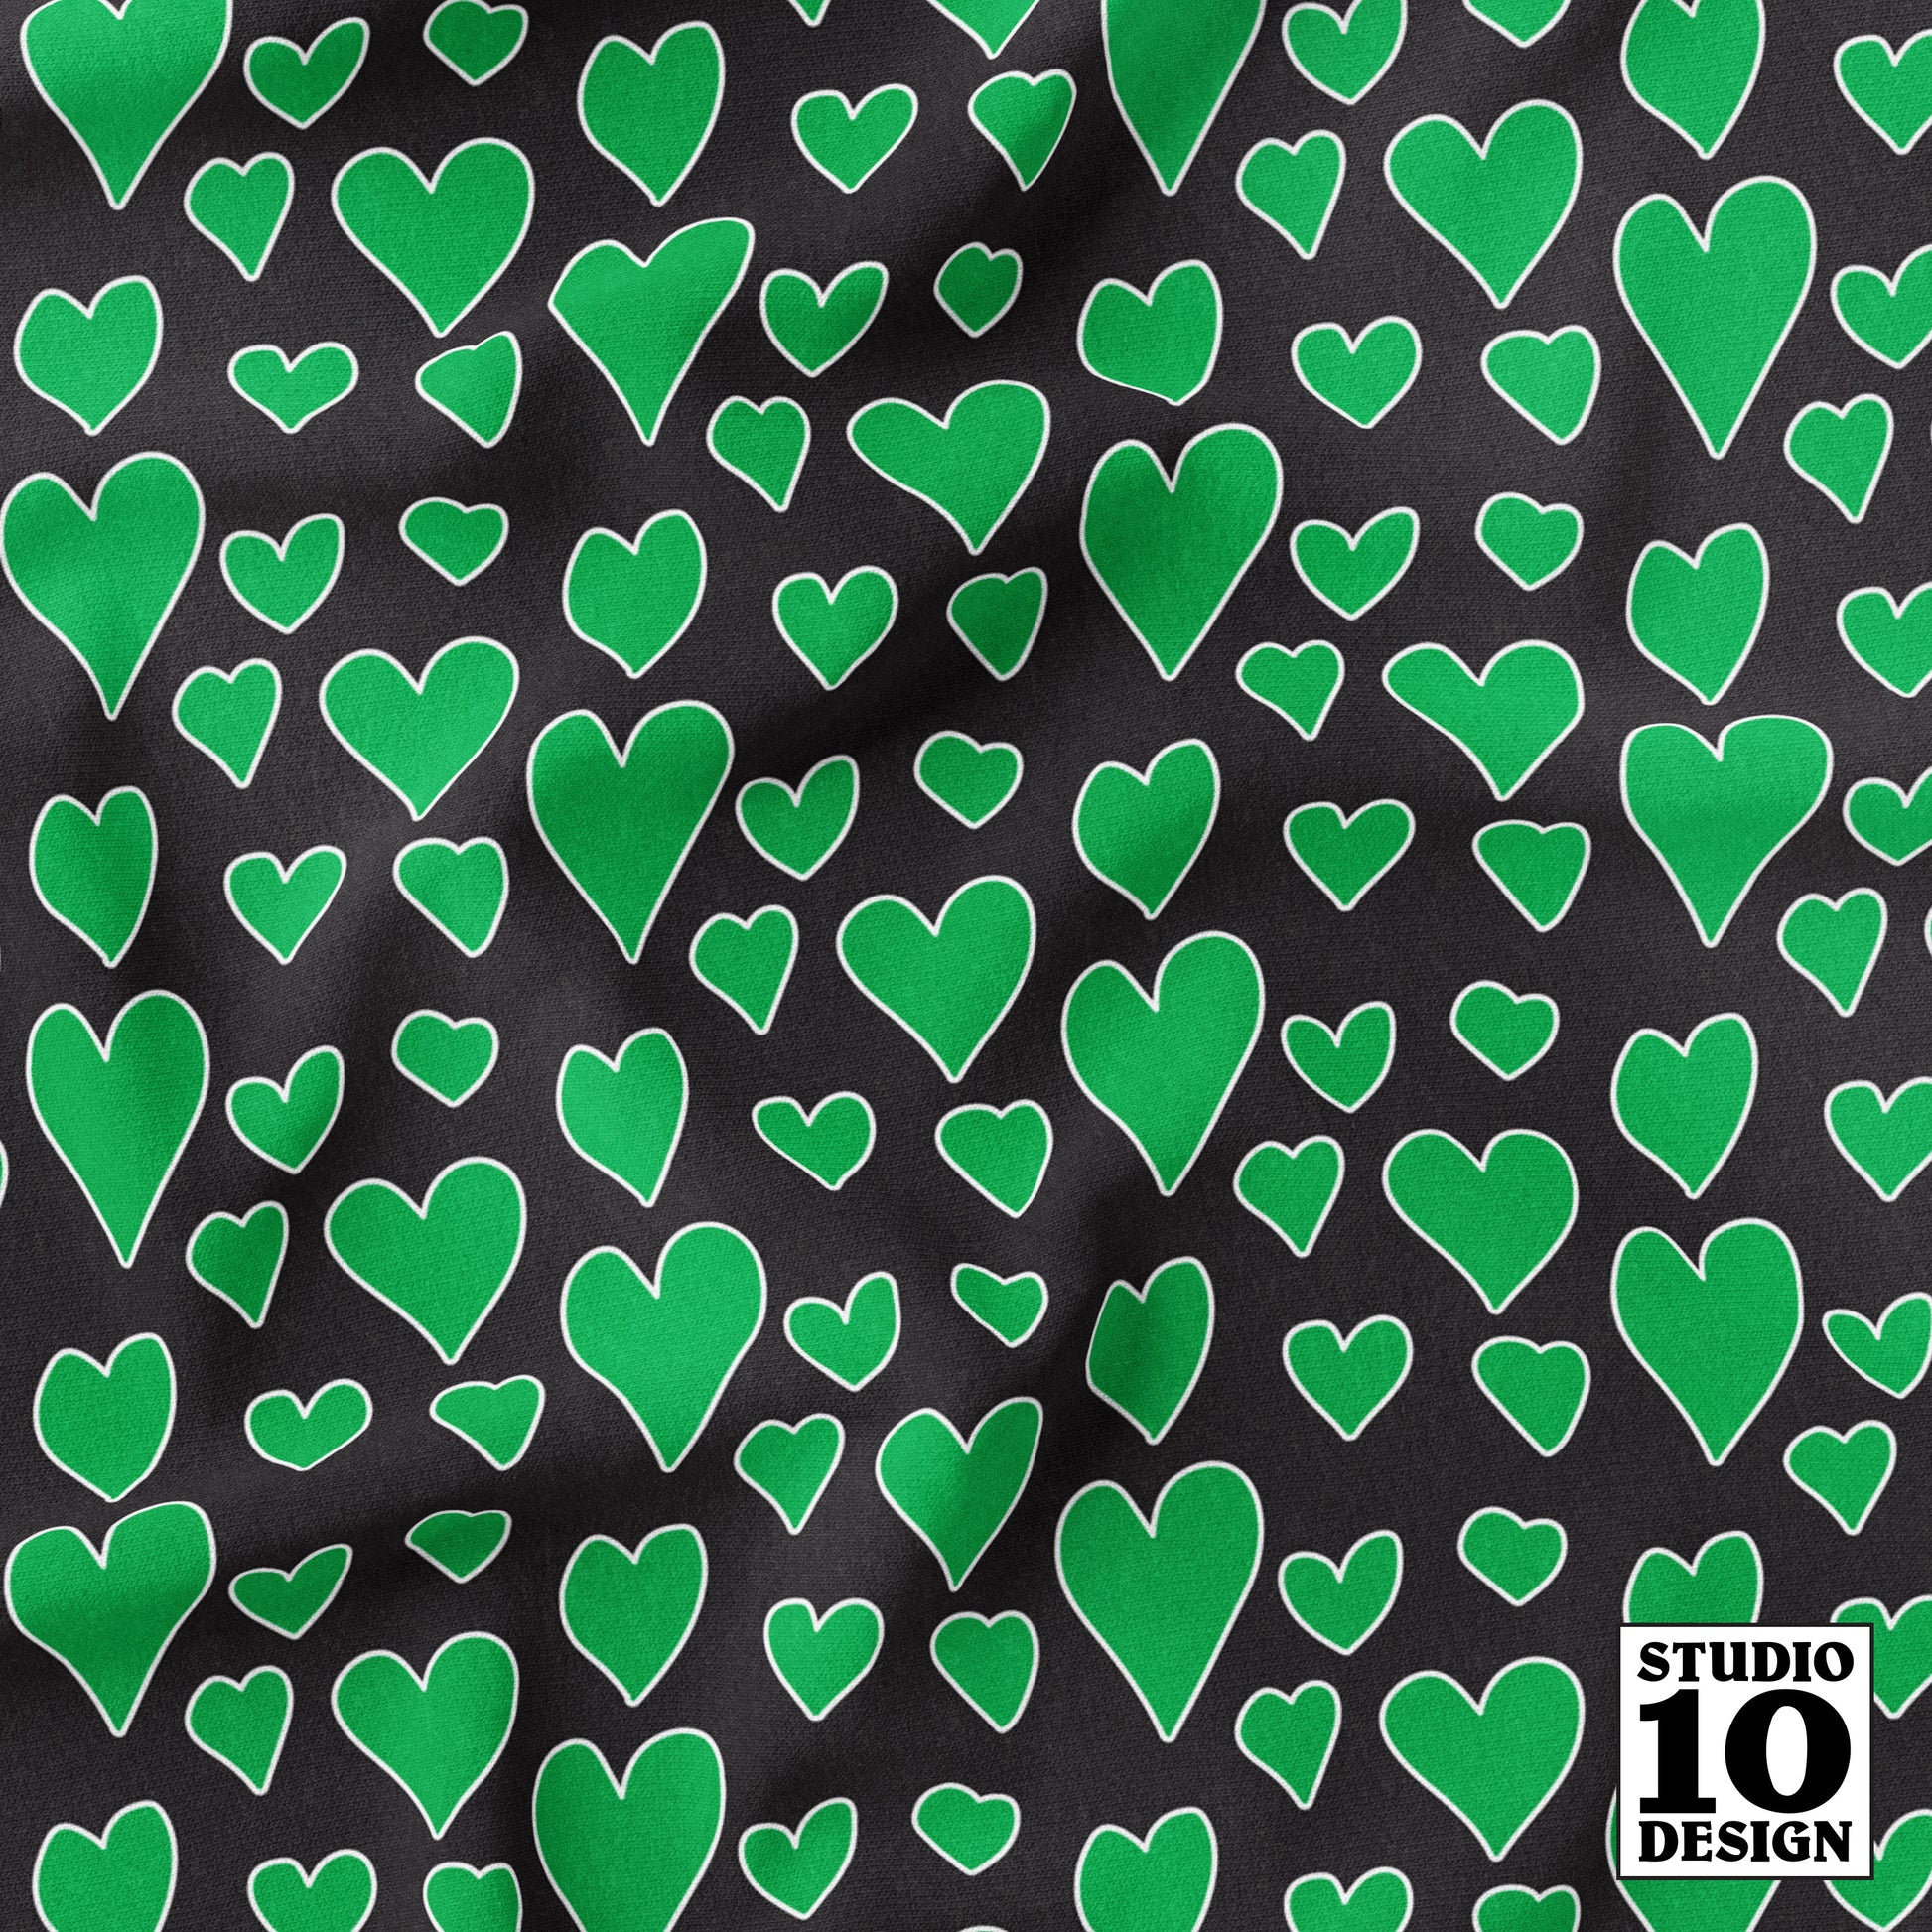 Rainbow Hearts Green+Black Printed Fabric by Studio Ten Design